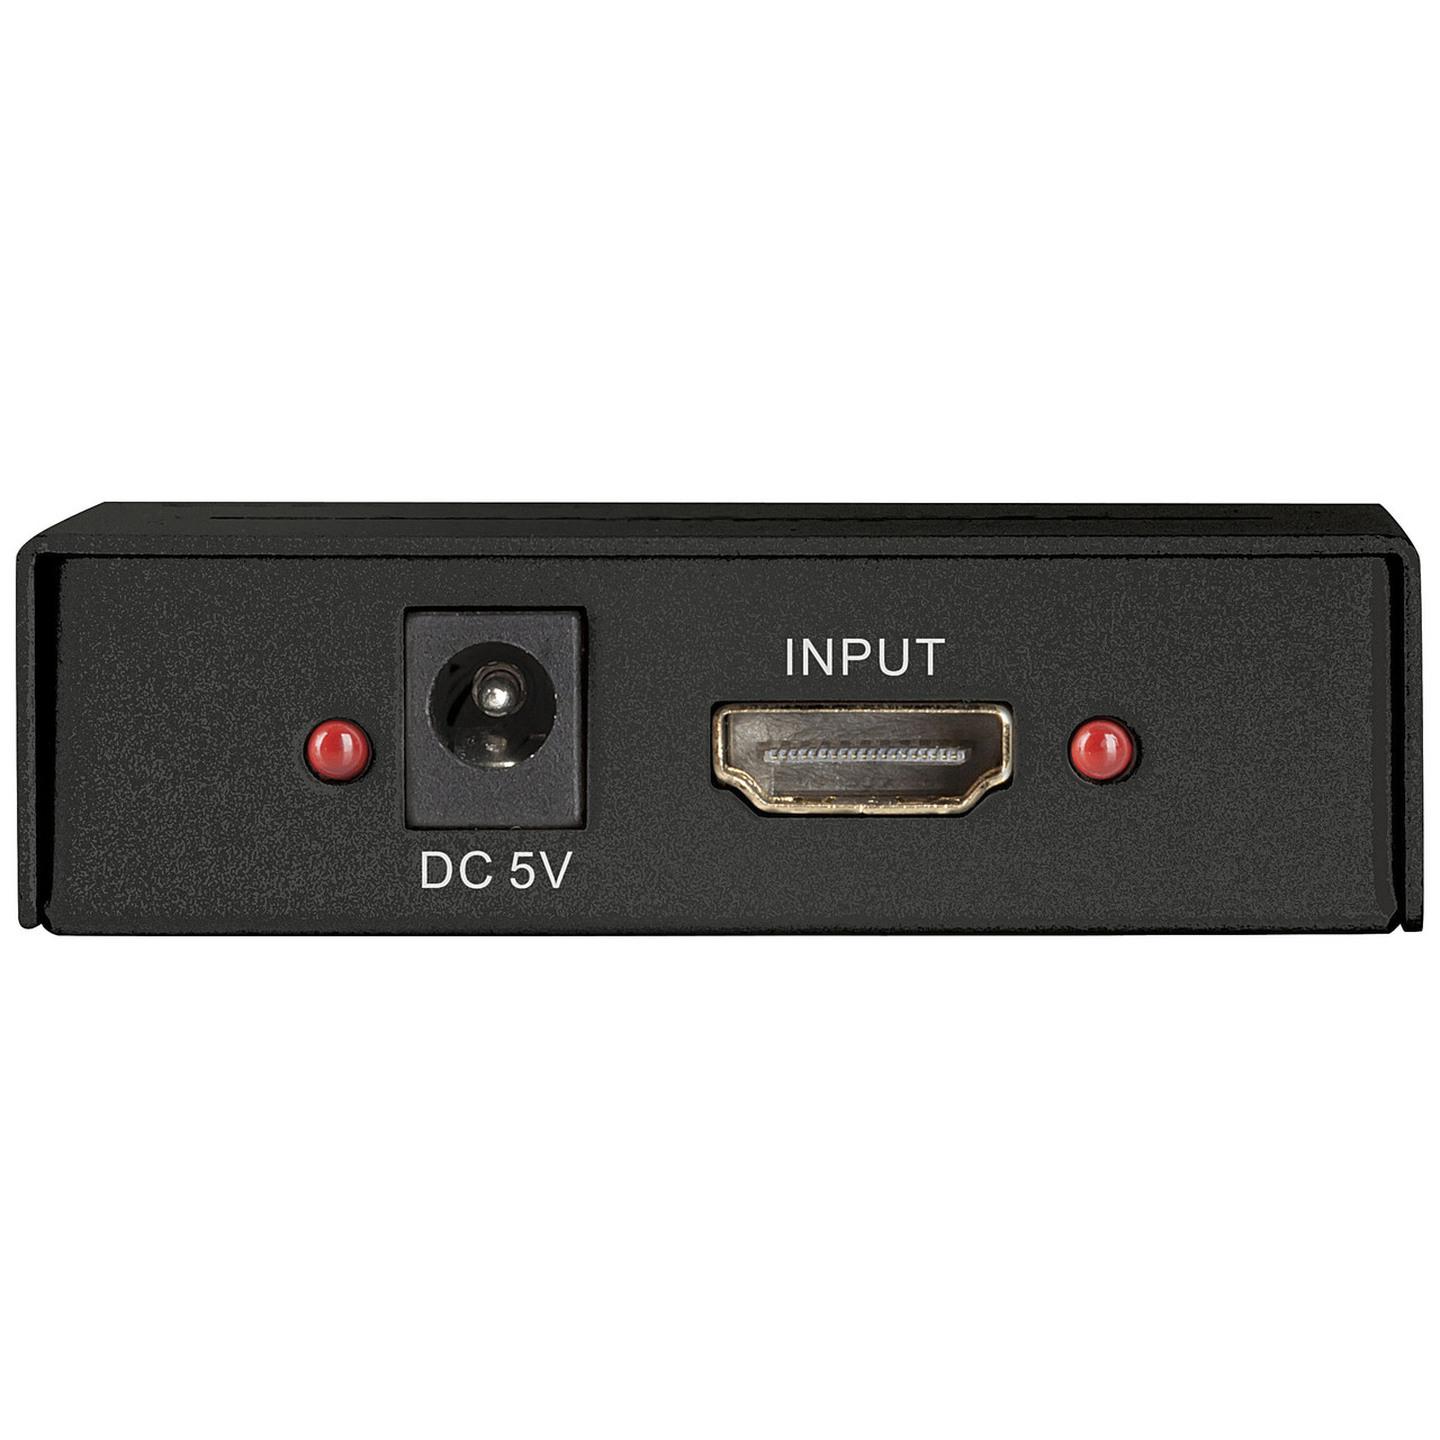 Digitech 2 Way HDMI Splitter With 4K Support